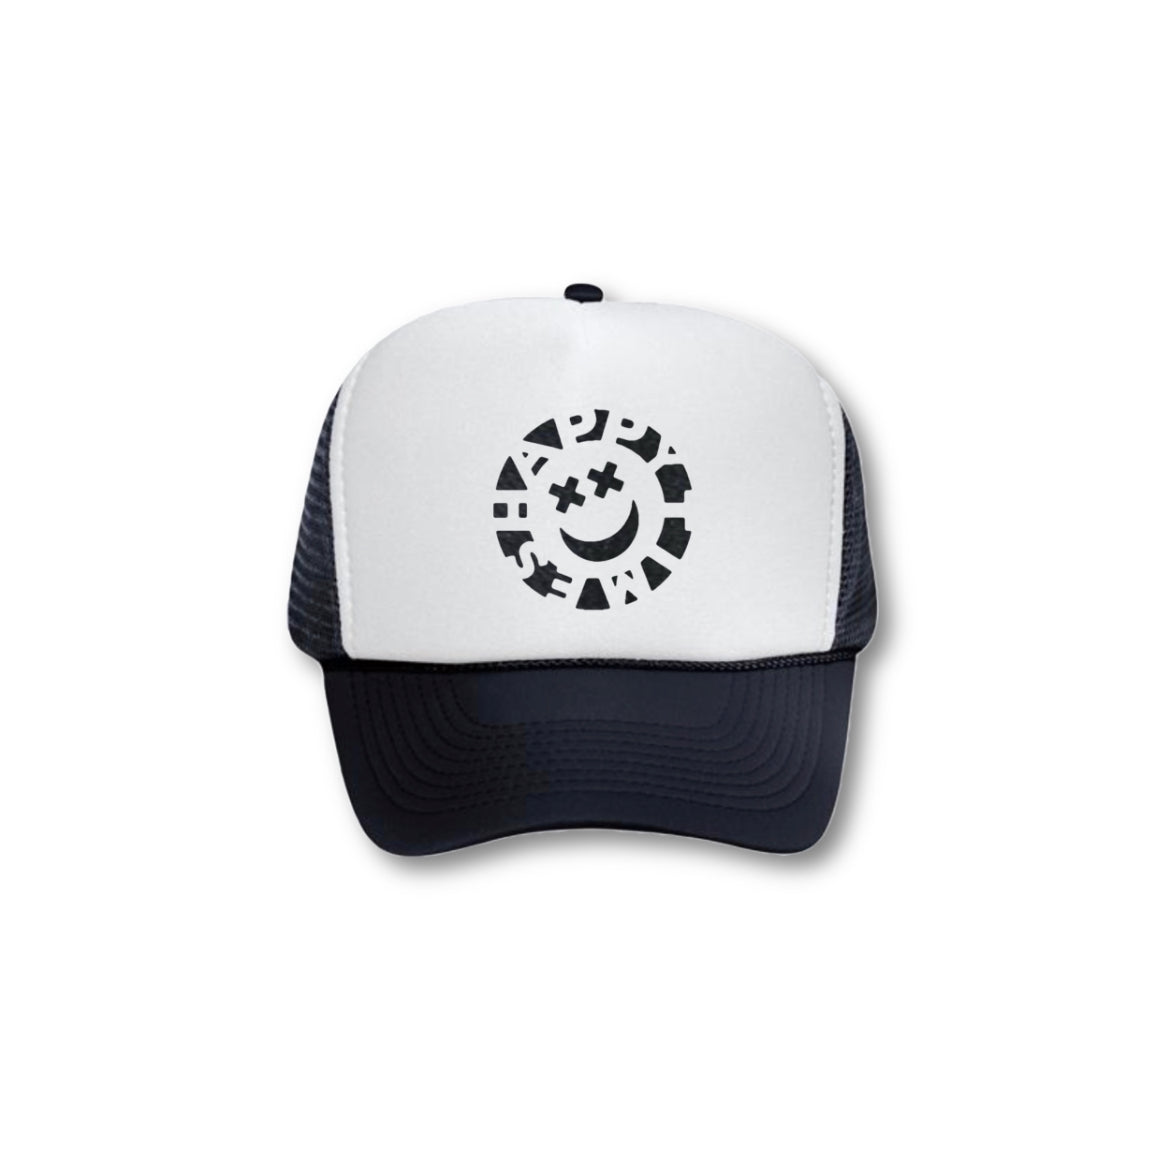 Hat Box - Round White with Black Trim / Signs & Designs